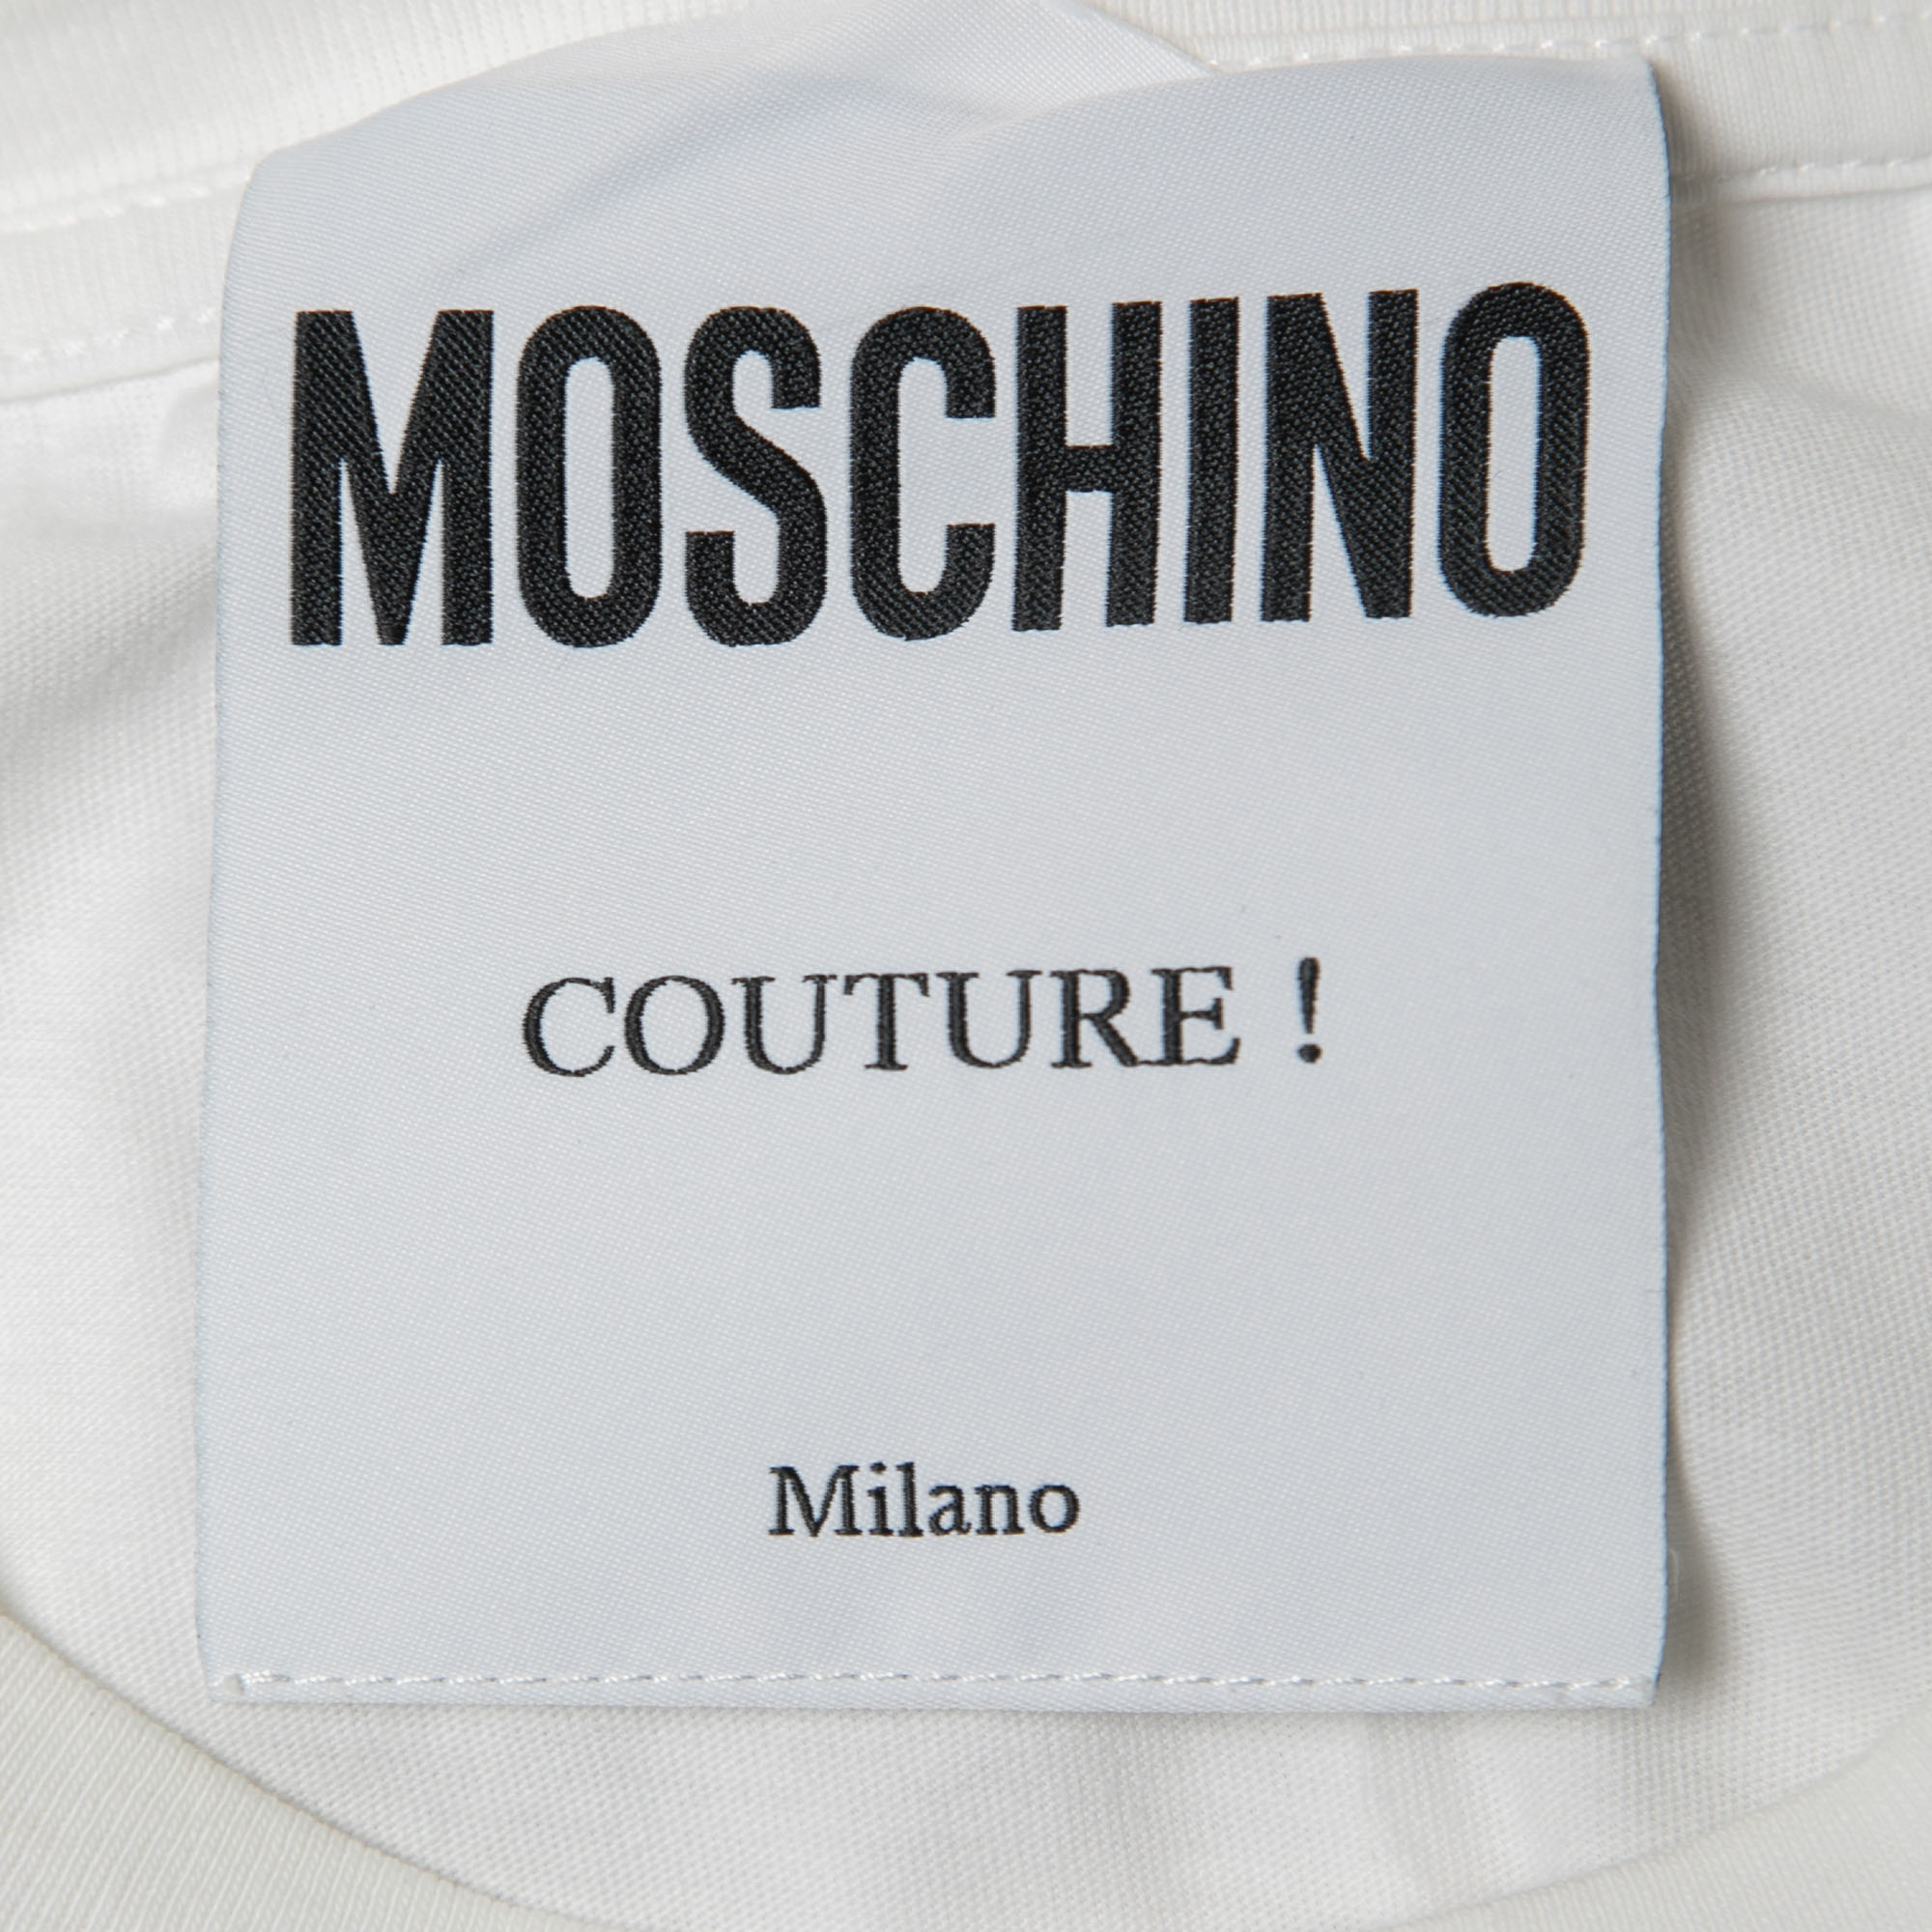 Moschino Couture White Matador Puppet Print Cotton Crew Neck T-shirt S